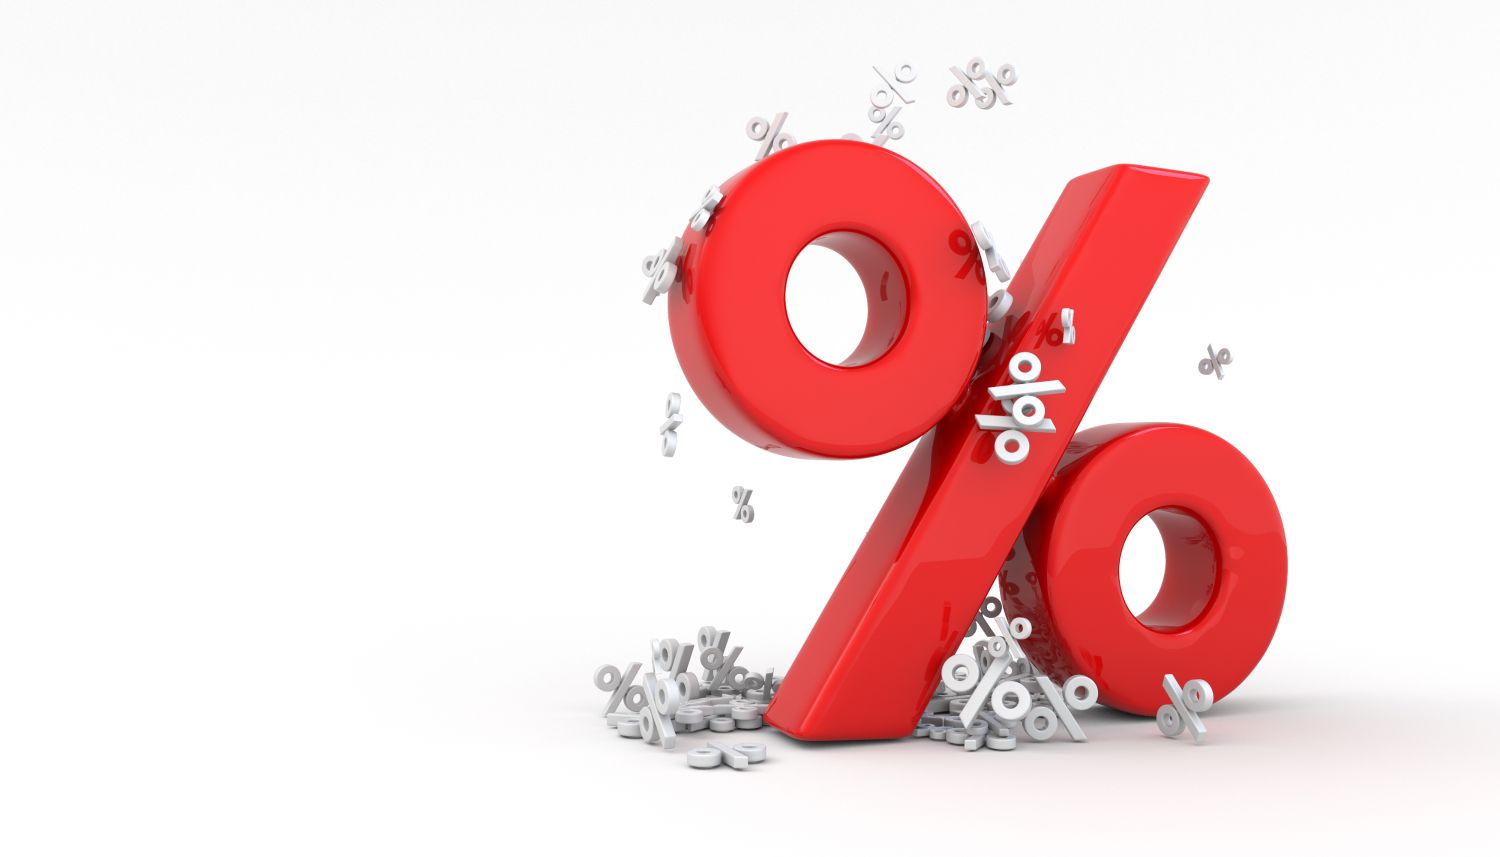 Image of red percentage symbols with smaller, white percentage symbols sprinkling downwards over it